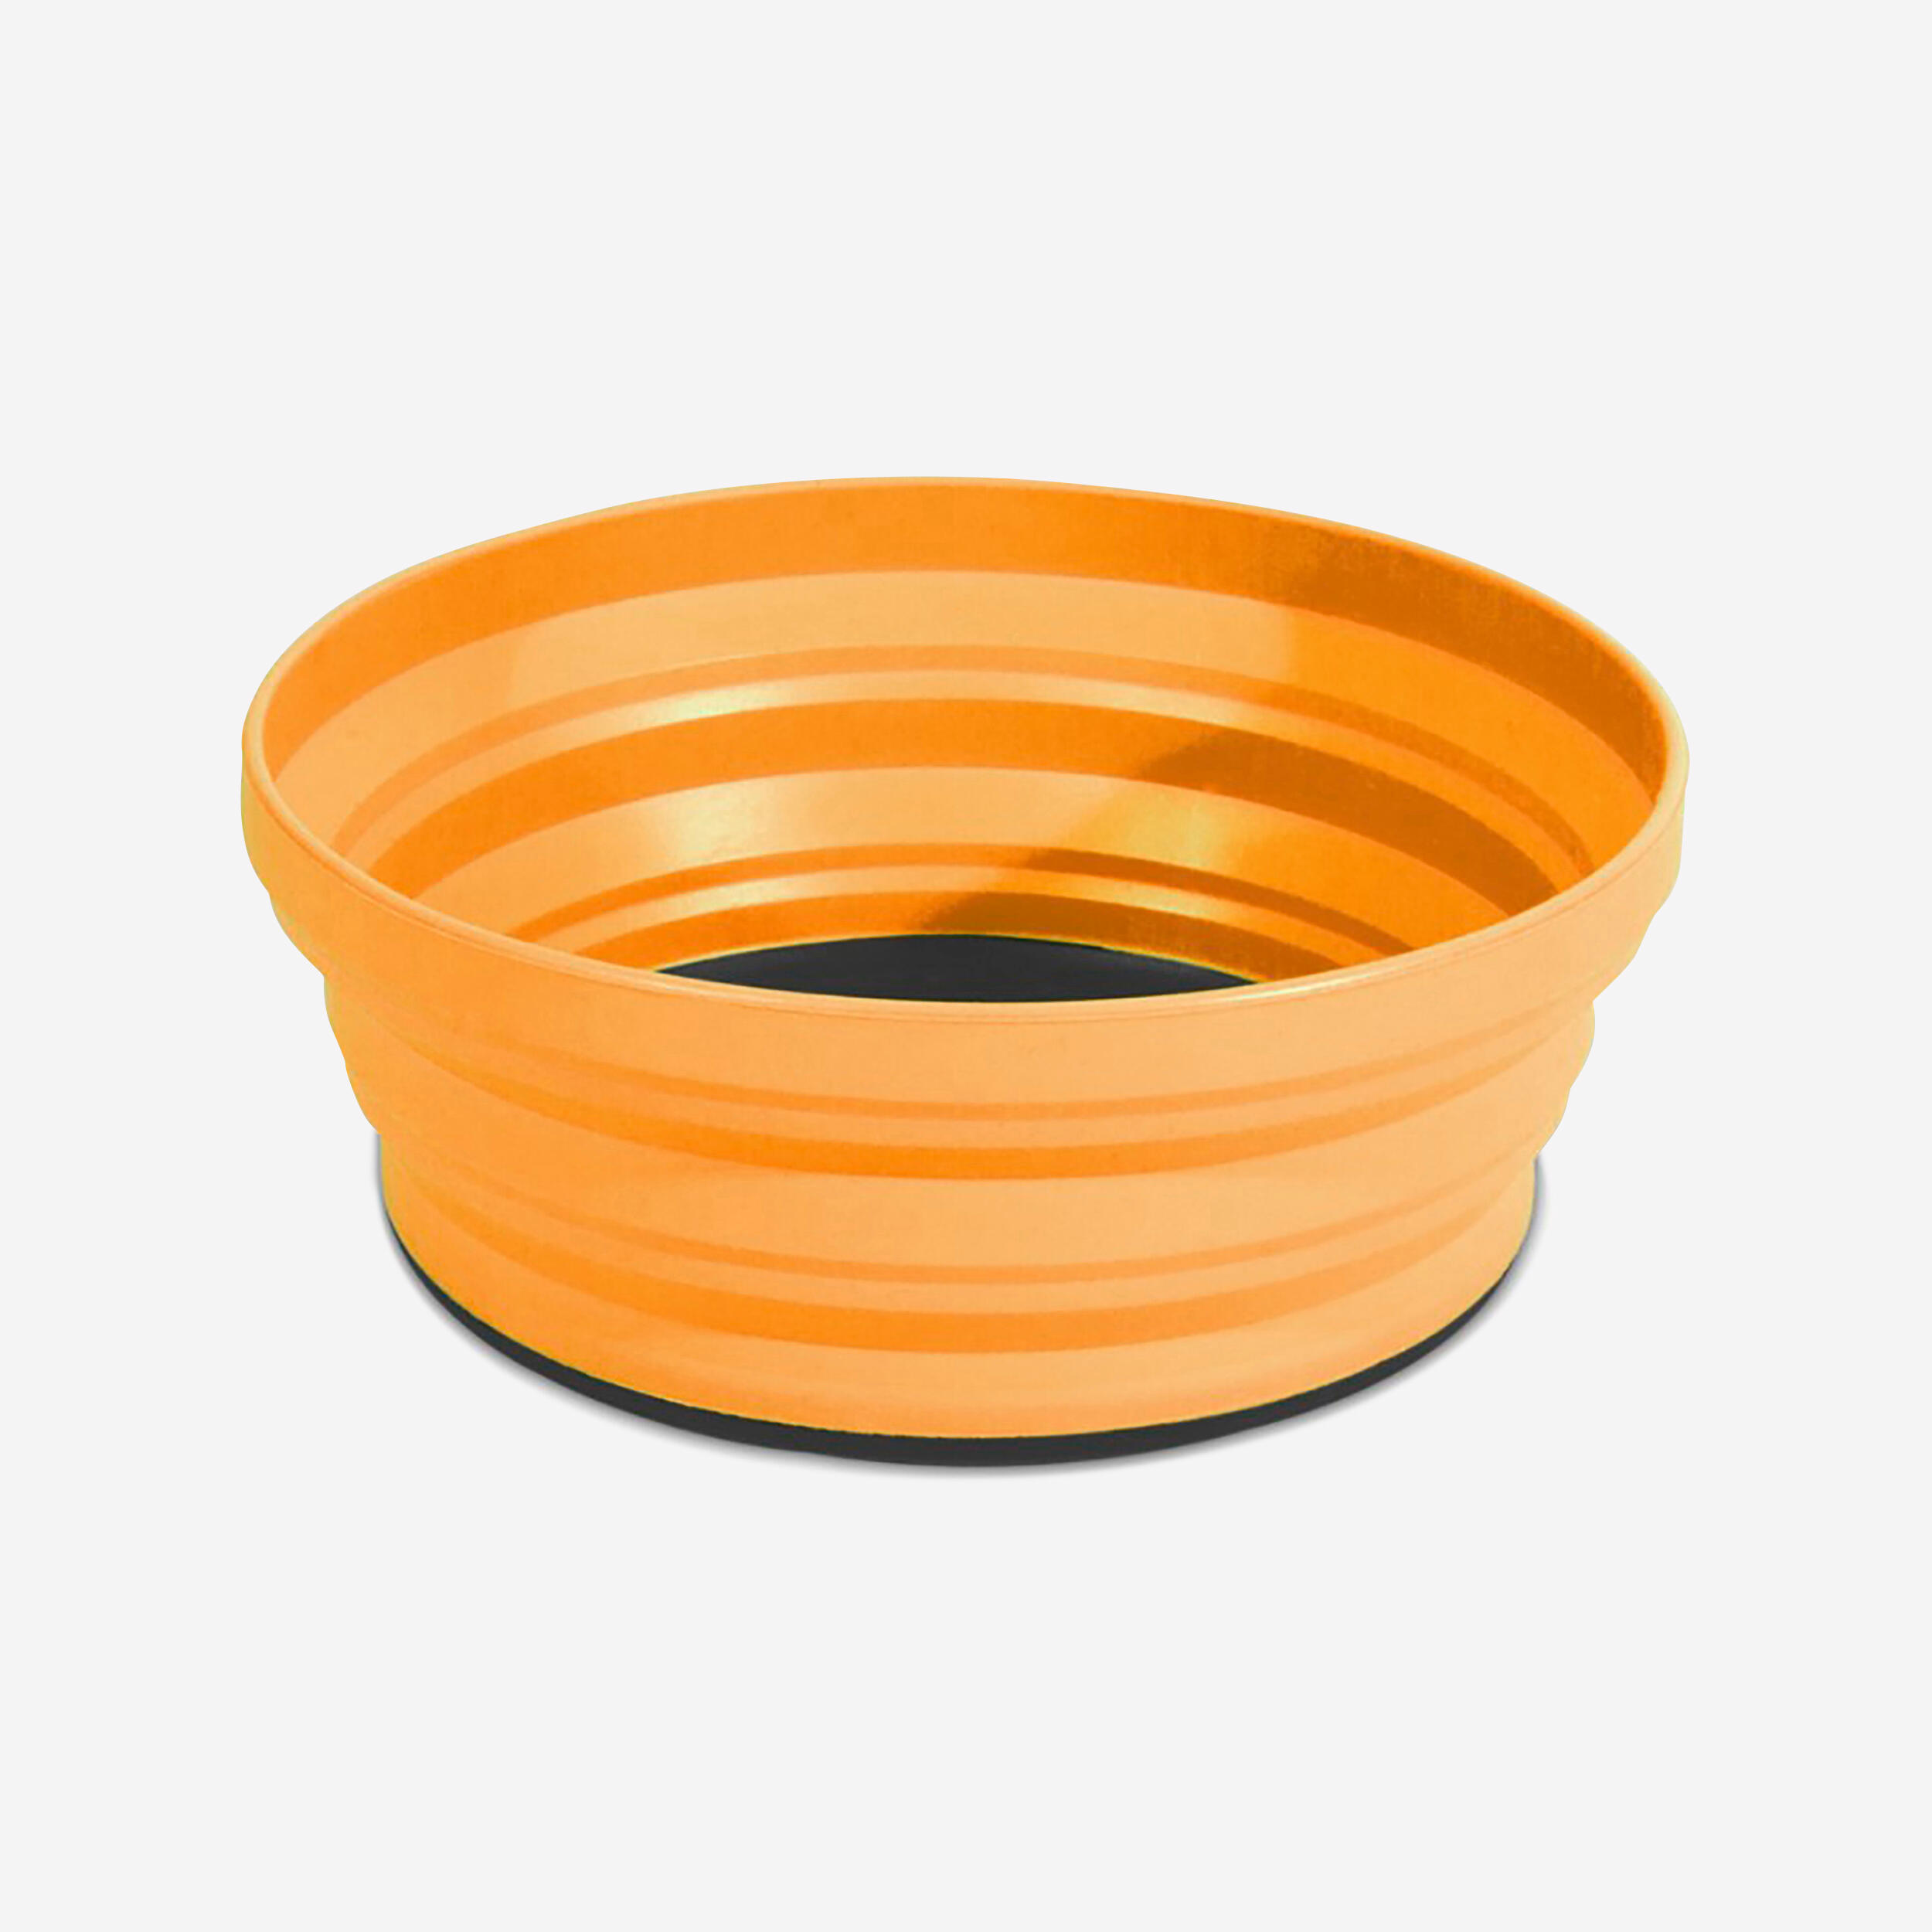 Compact Bowl 0.65L - Orange 1/1